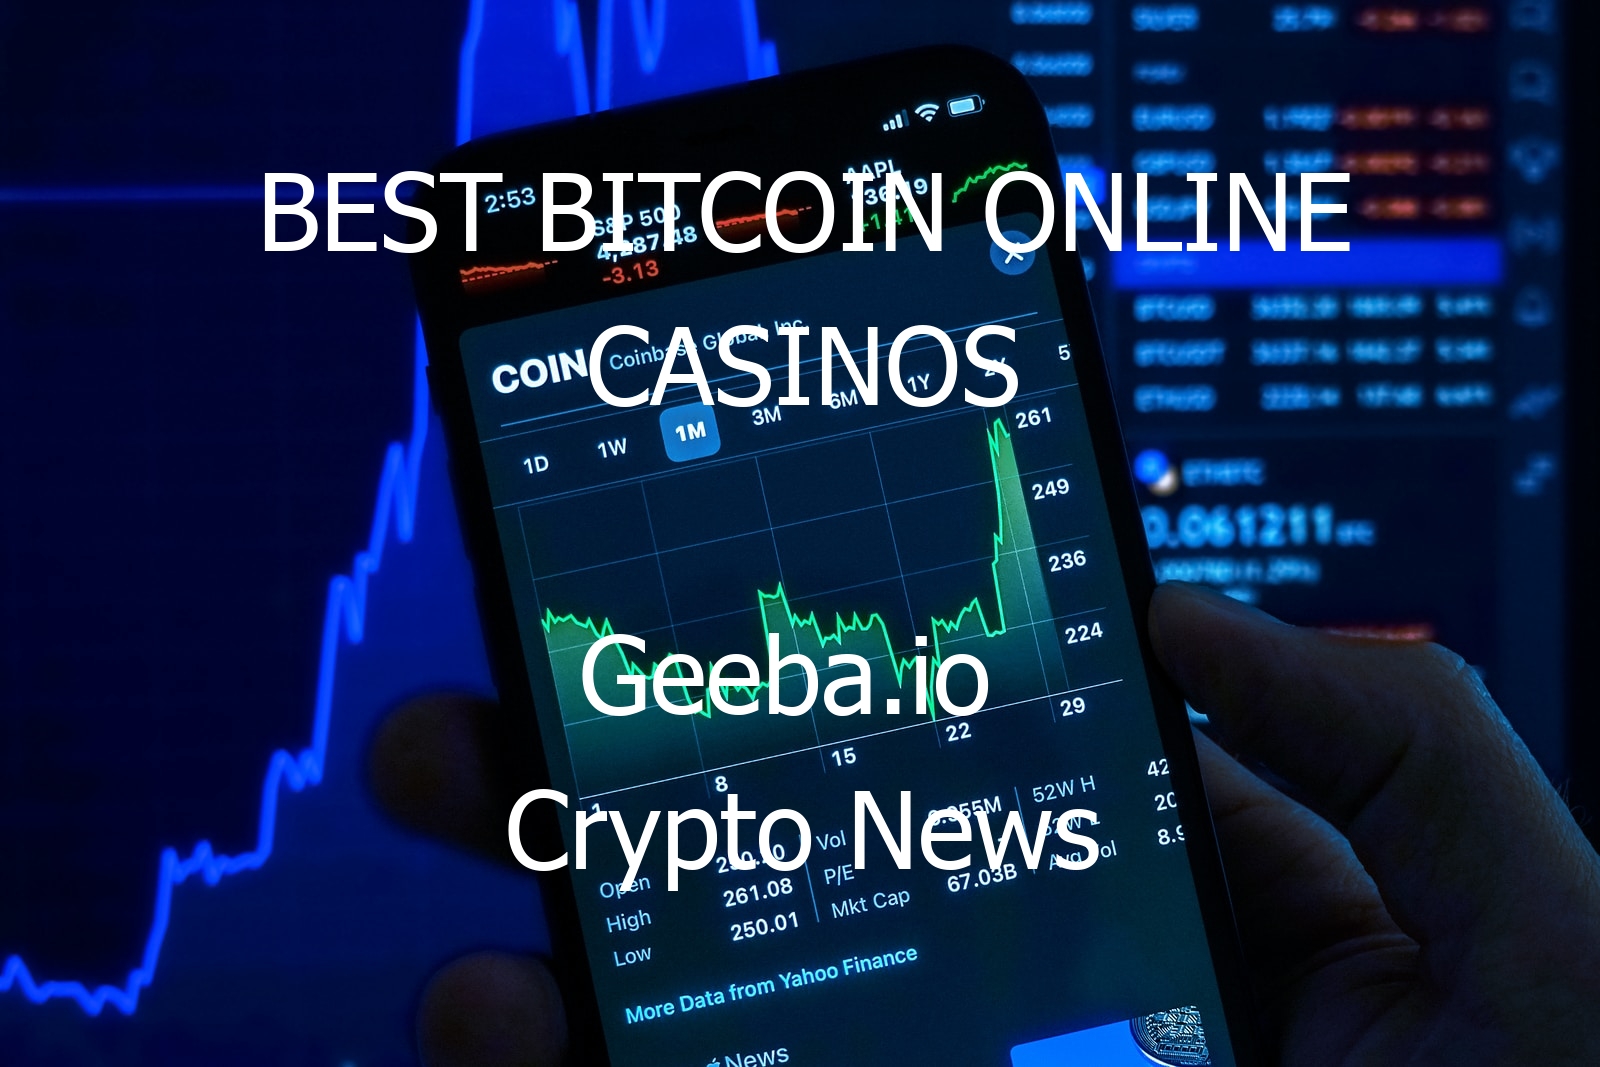 best bitcoin online casinos 2192